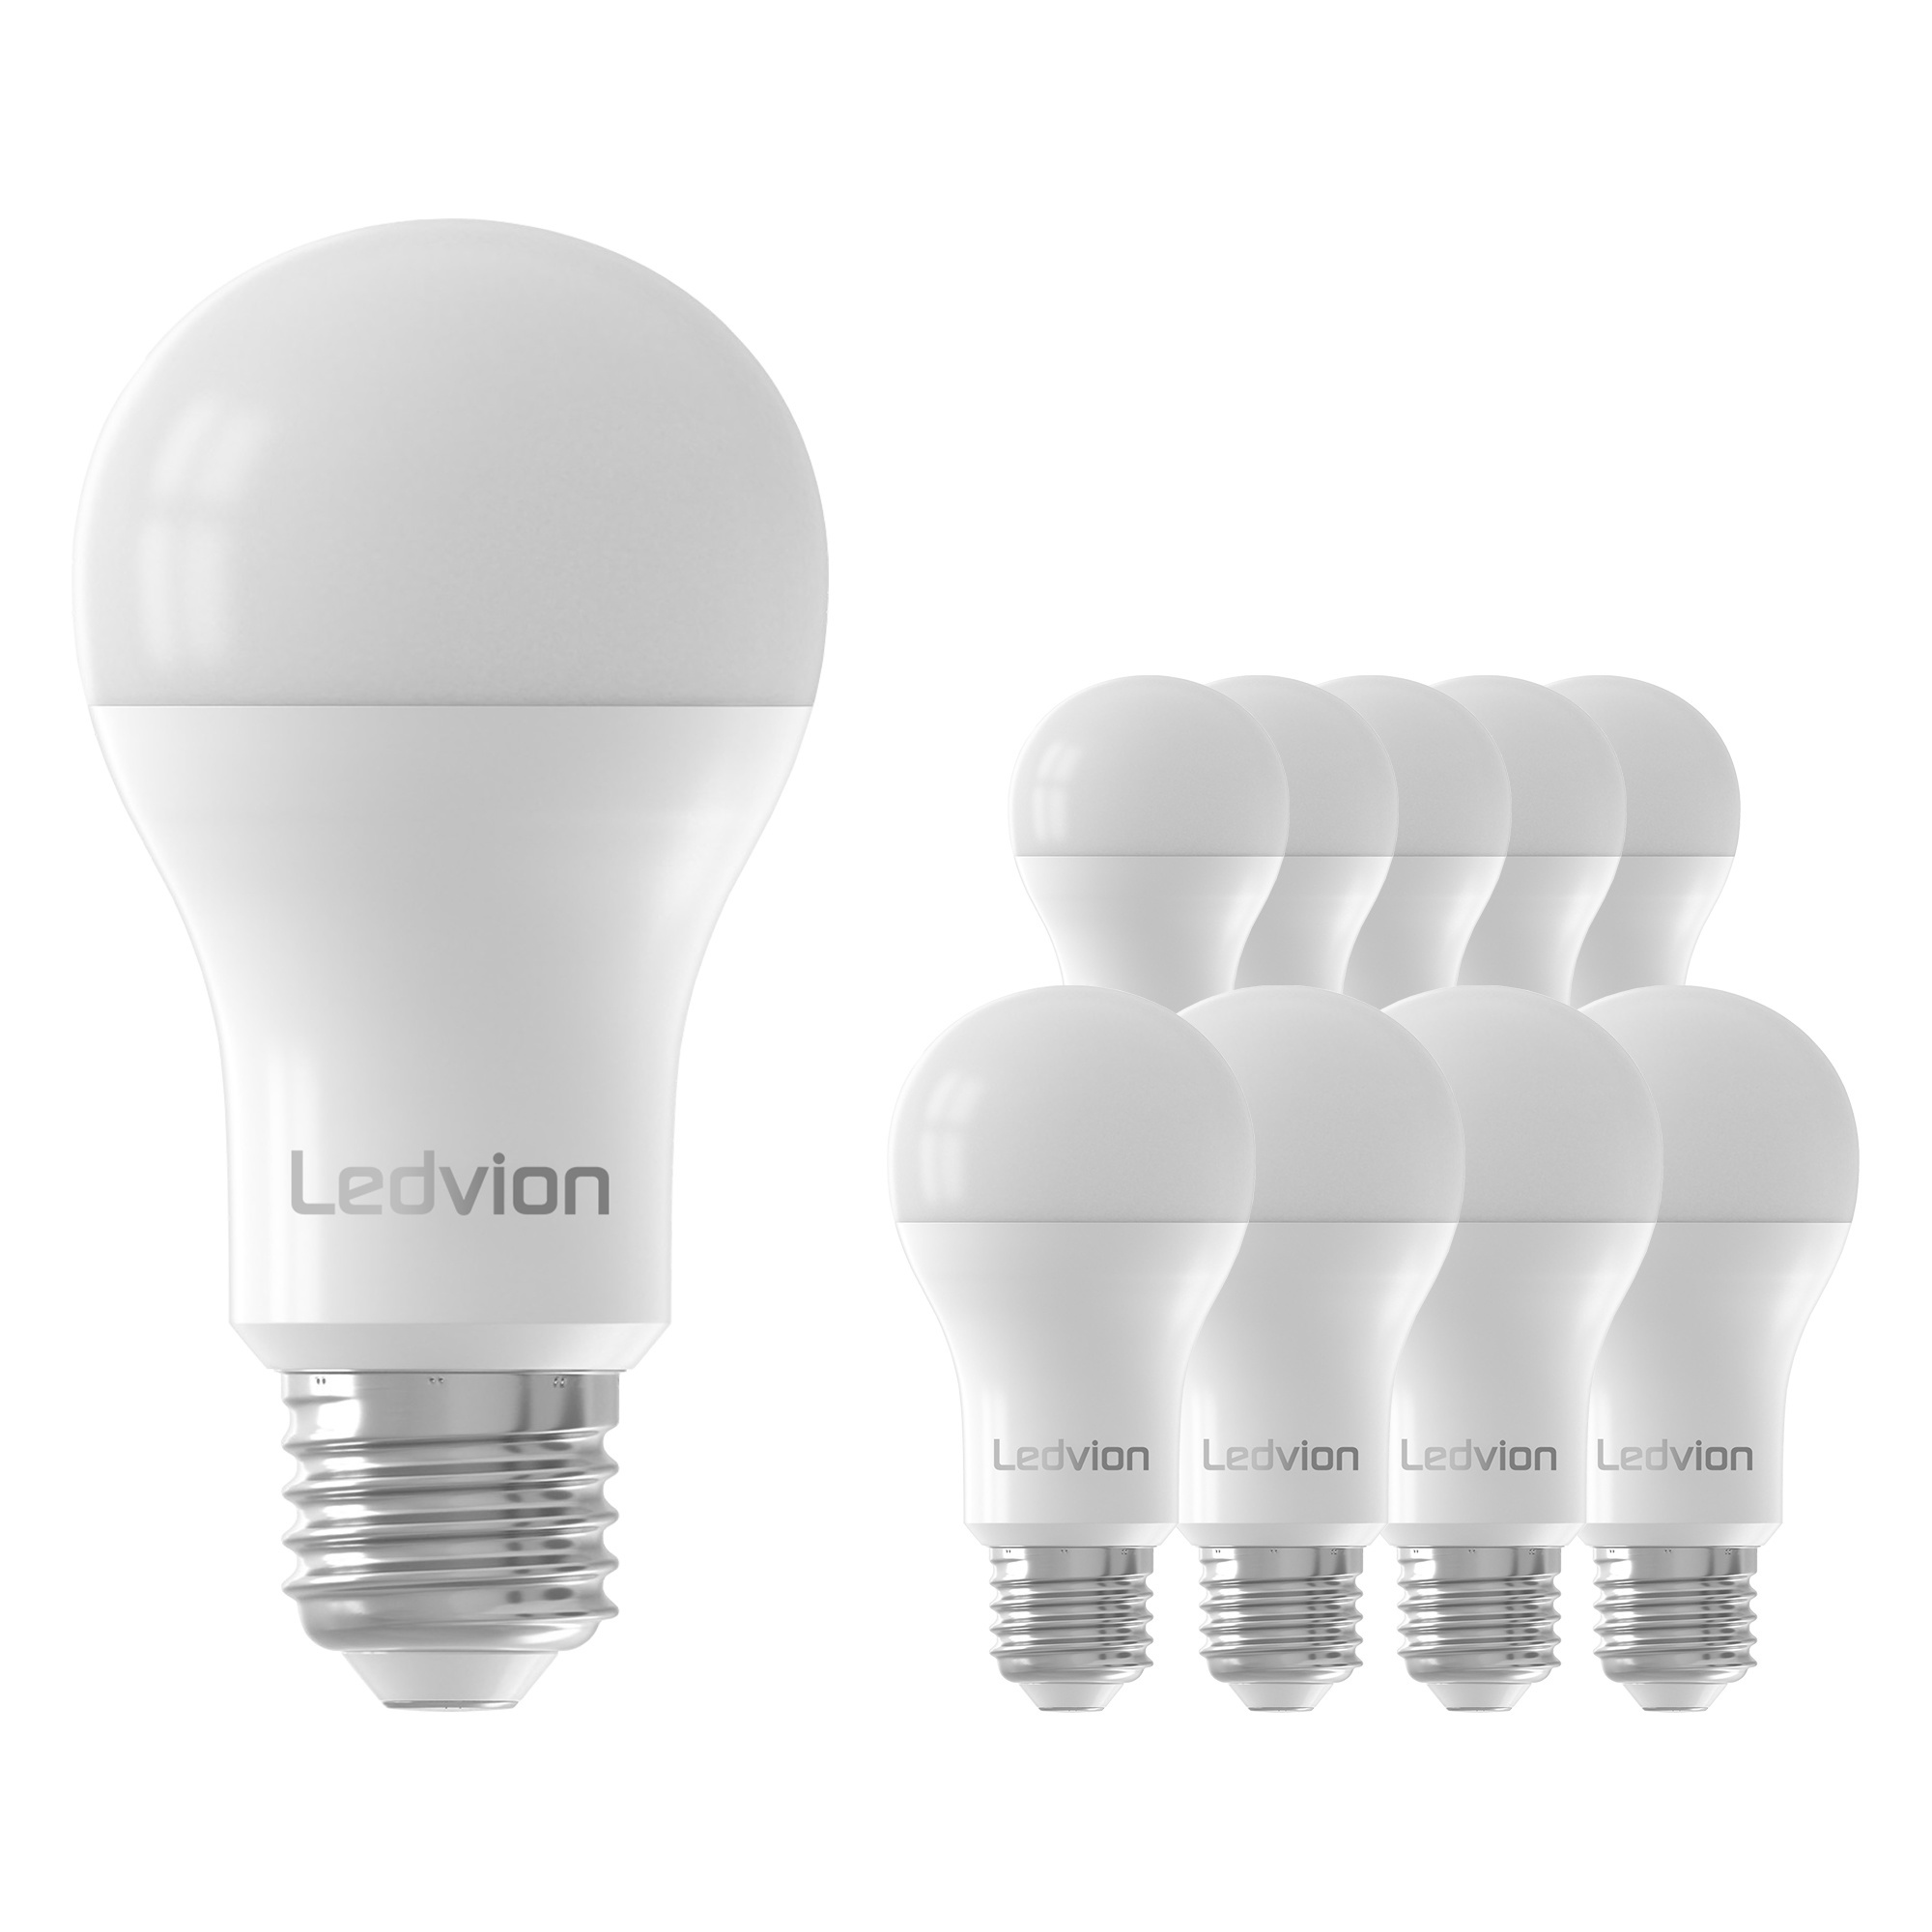 scheuren optie schudden Ledvion E27 LED Lamp - 8.8W - 2700K - 806 Lumen - Ledvion.com